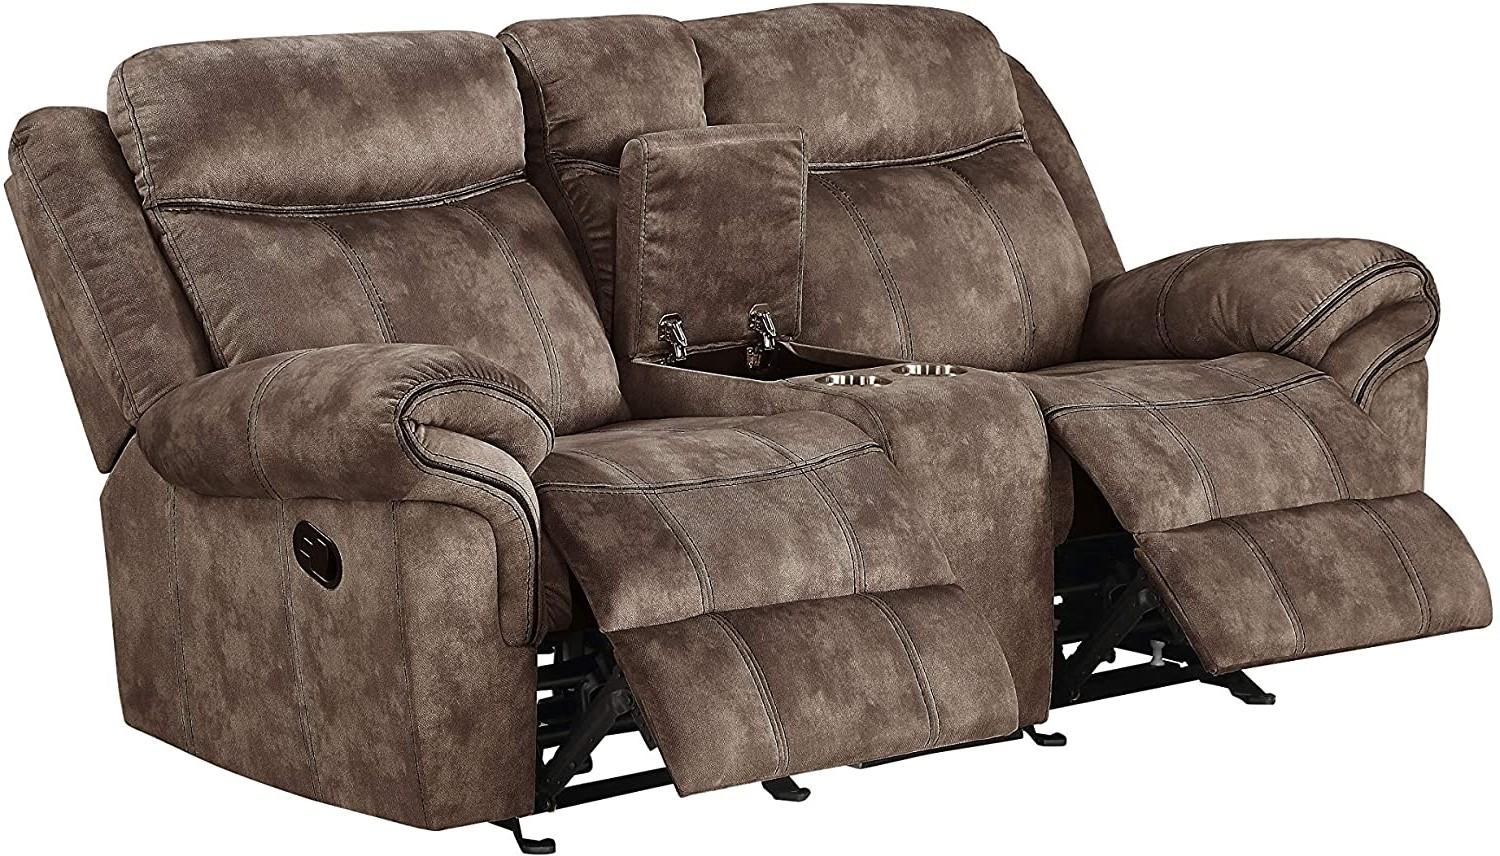 

    
Acme Furniture Zubaida Sofa Loveseat and Chair Chocolate 55020-3pcs
